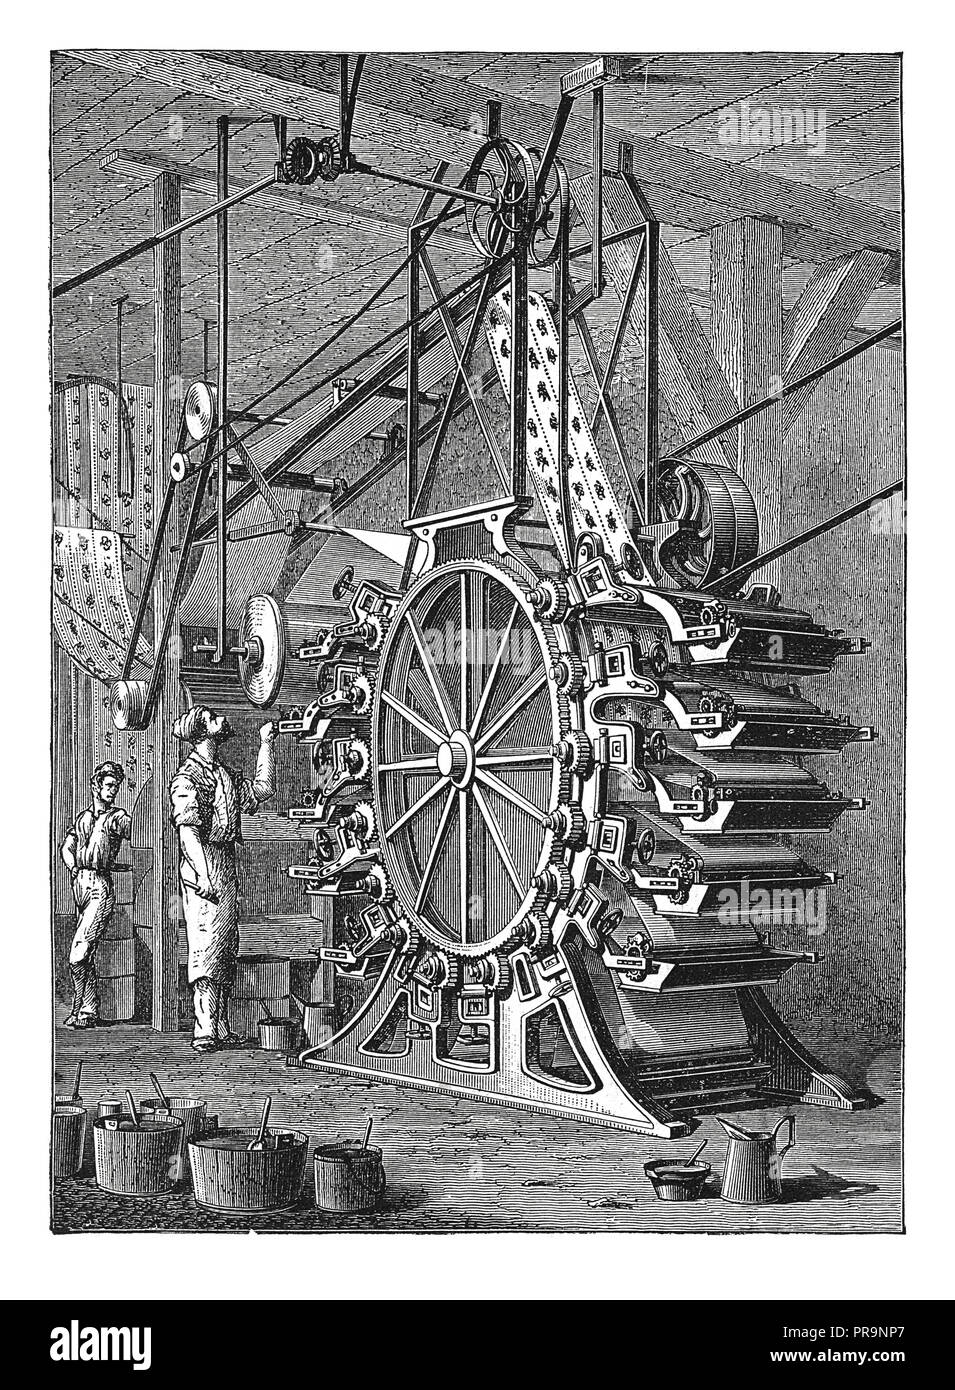 19-th century illustration of paper machine printing with 10 colors. Published in 'Novoveki Izumi u znanosti, obrtu i umjetnosti' by dr. Bogoslav Sule Stock Photo